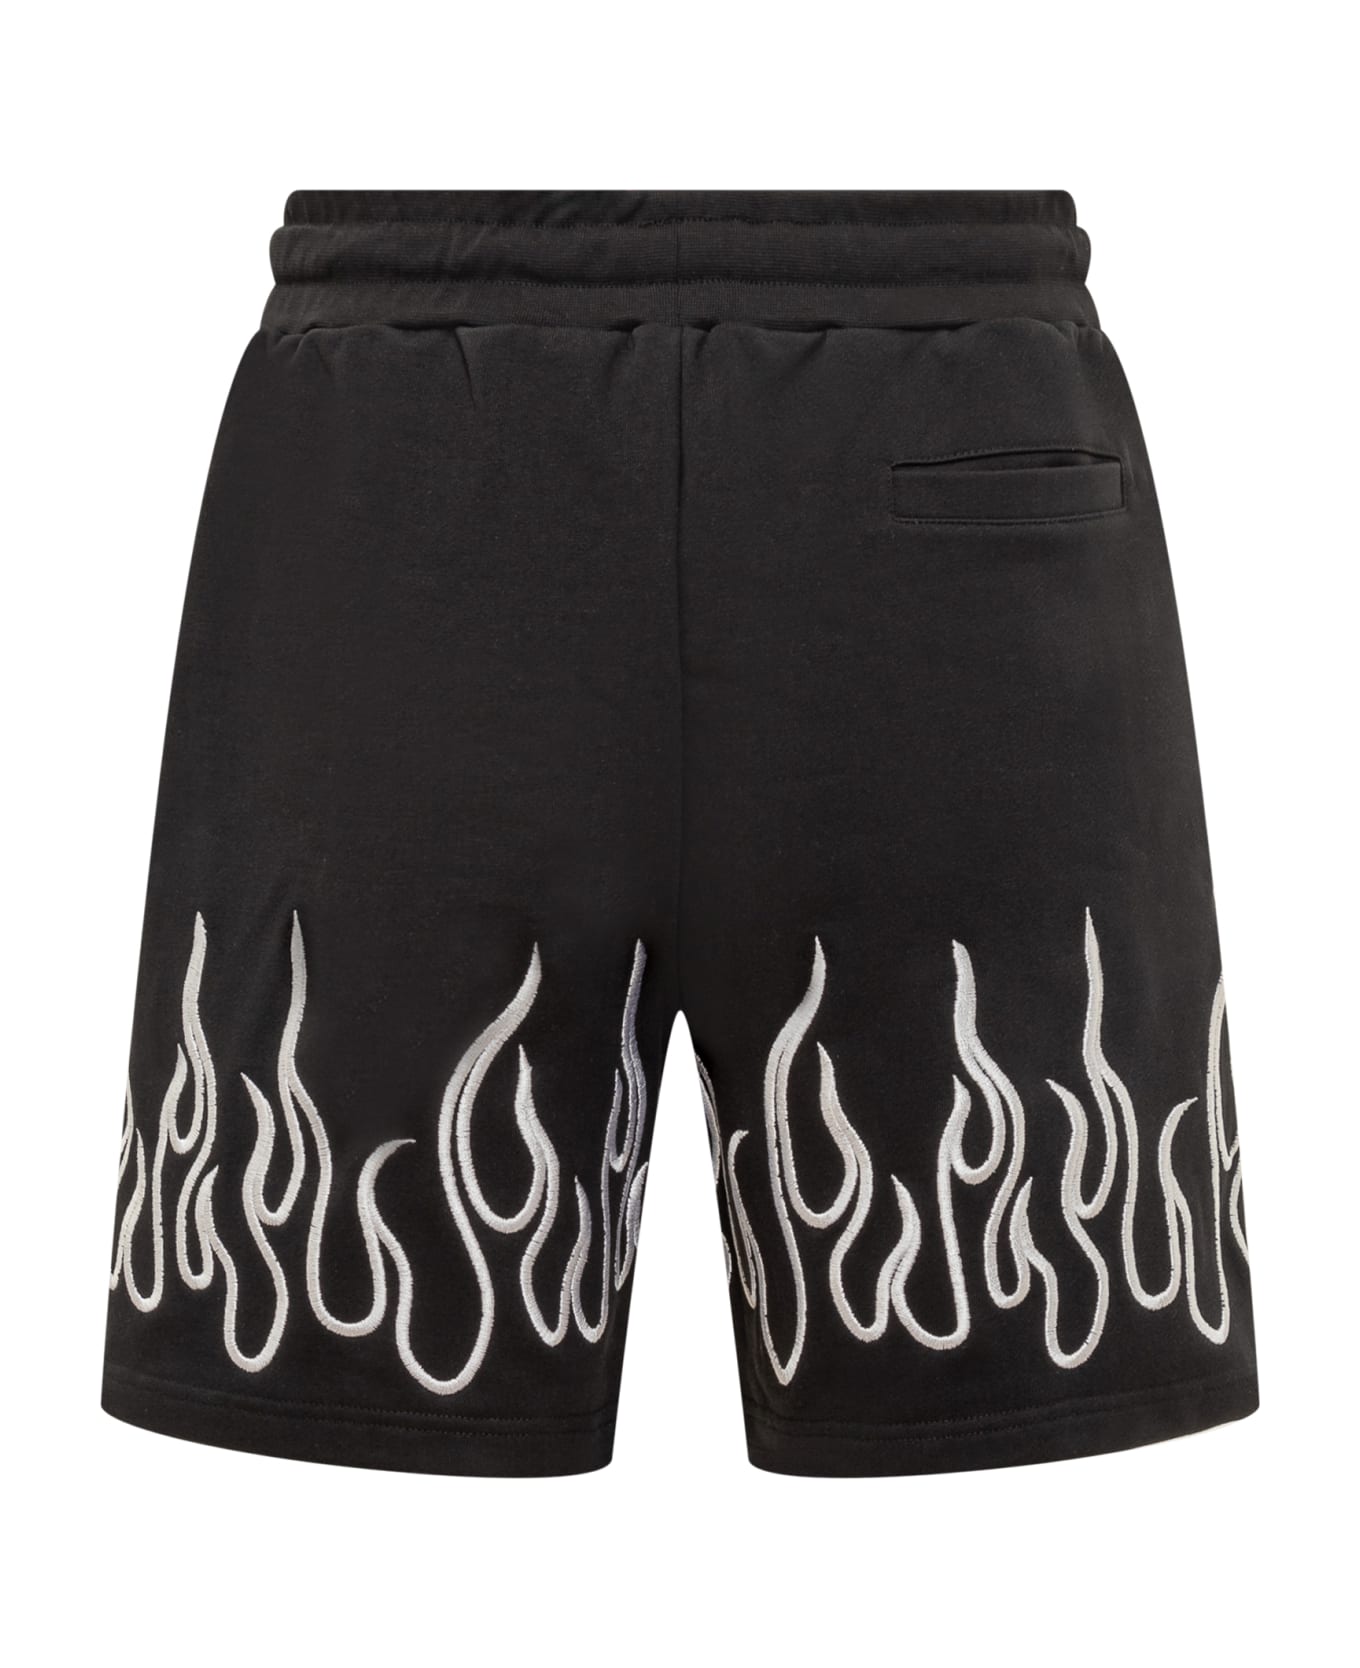 Vision of Super Flames Shorts - BLACK ショートパンツ